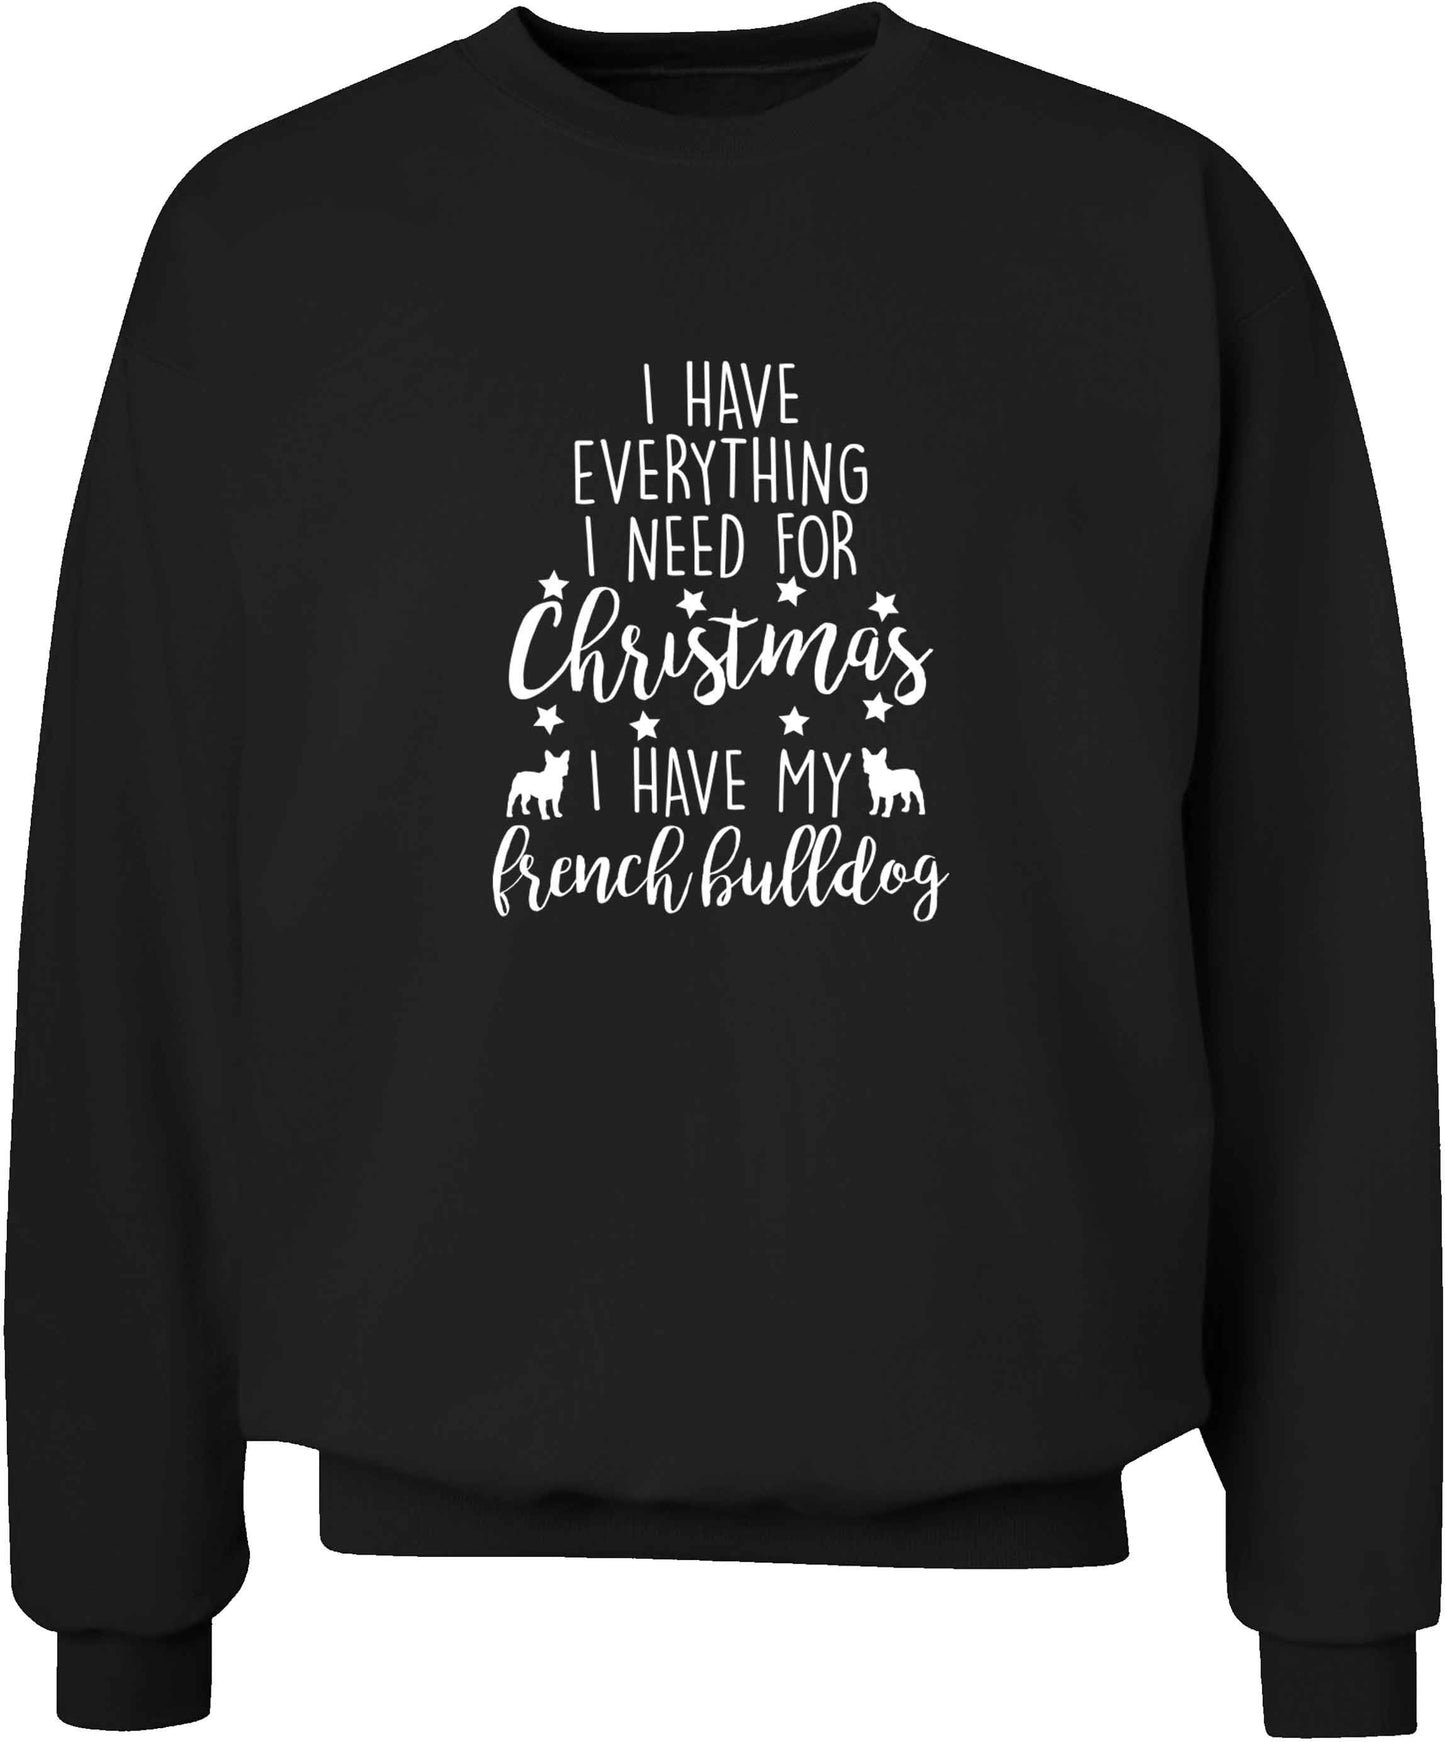 I have everything I need for Christmas I have my french bulldog adult's unisex black sweater 2XL